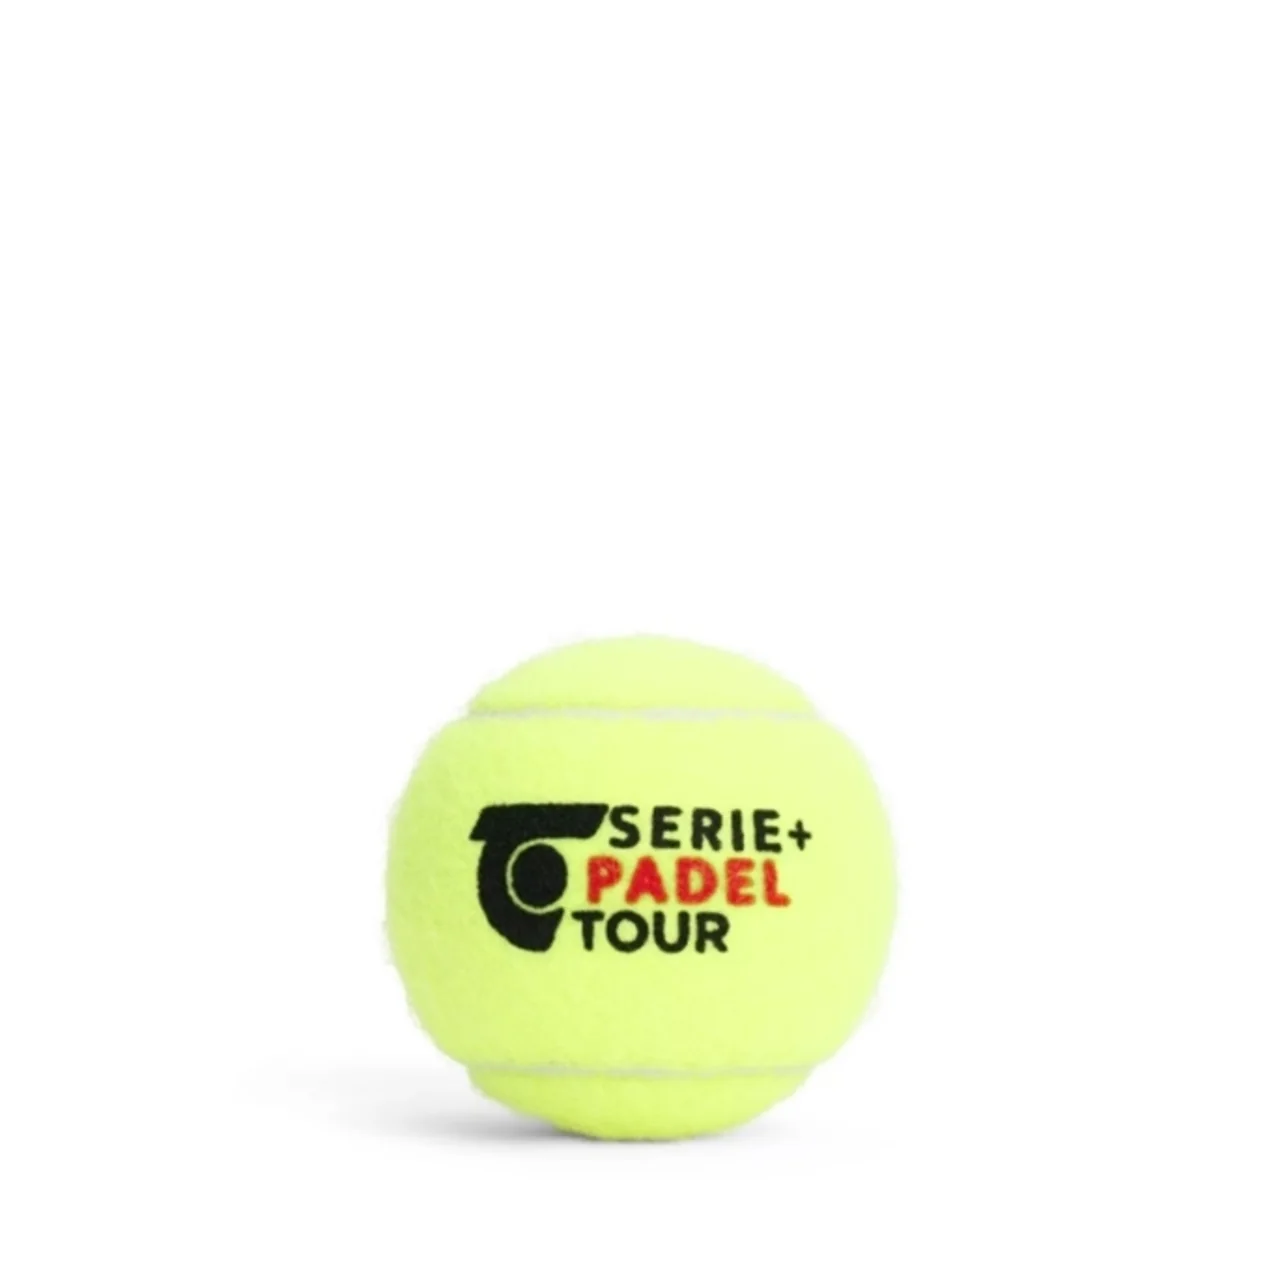 Tretorn Serie + Padel Tour 12 tuubia